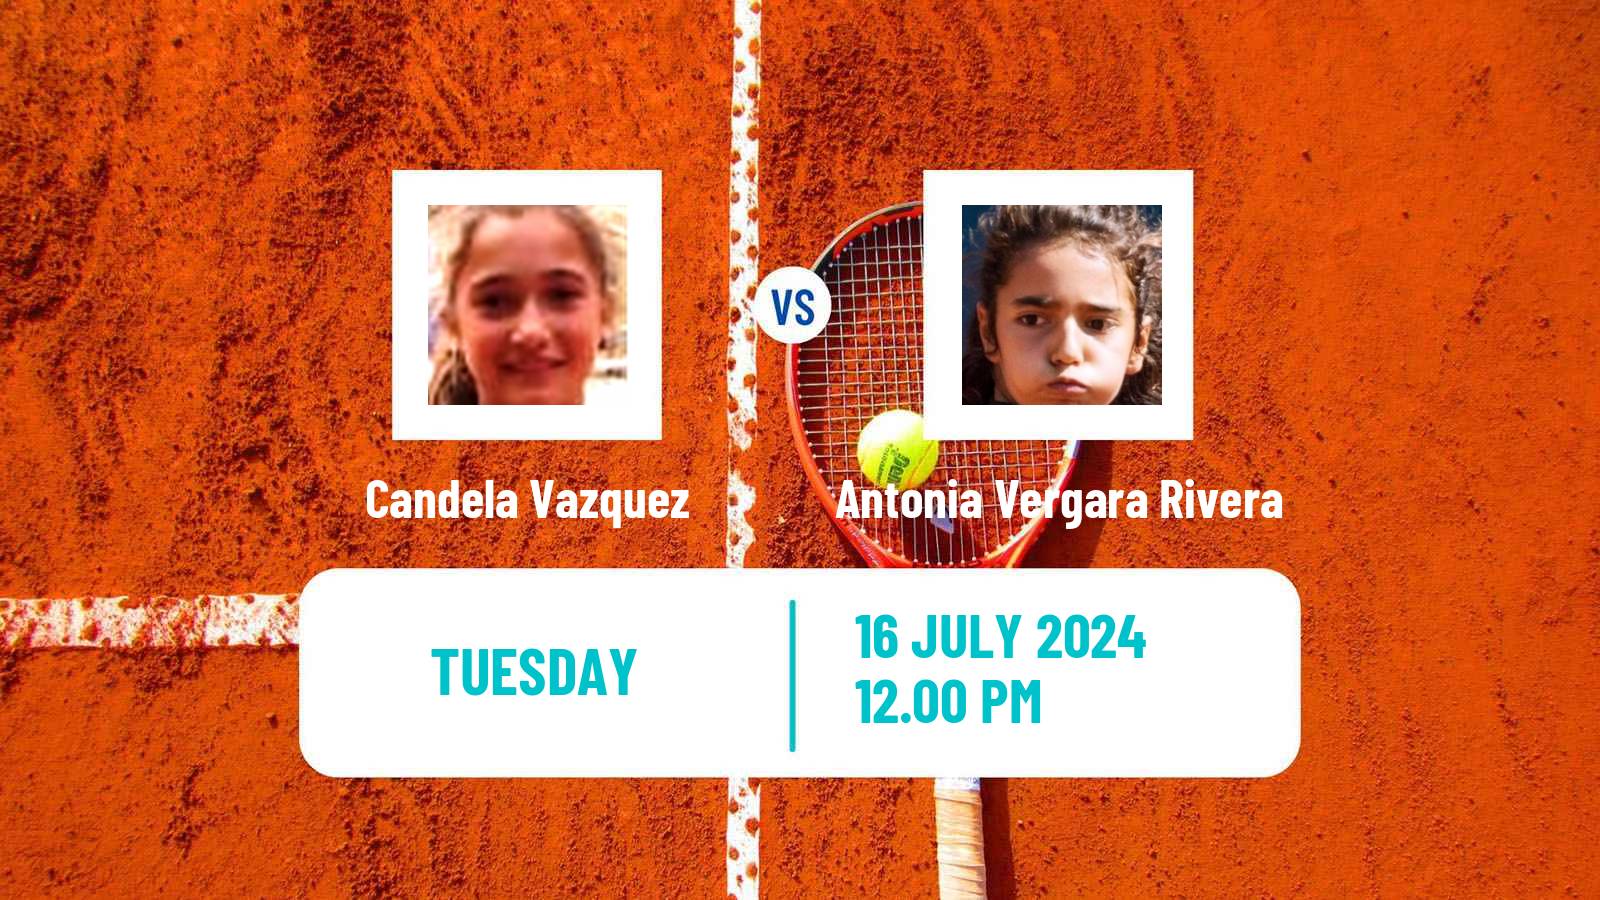 Tennis ITF W15 Lujan 2 Women Candela Vazquez - Antonia Vergara Rivera